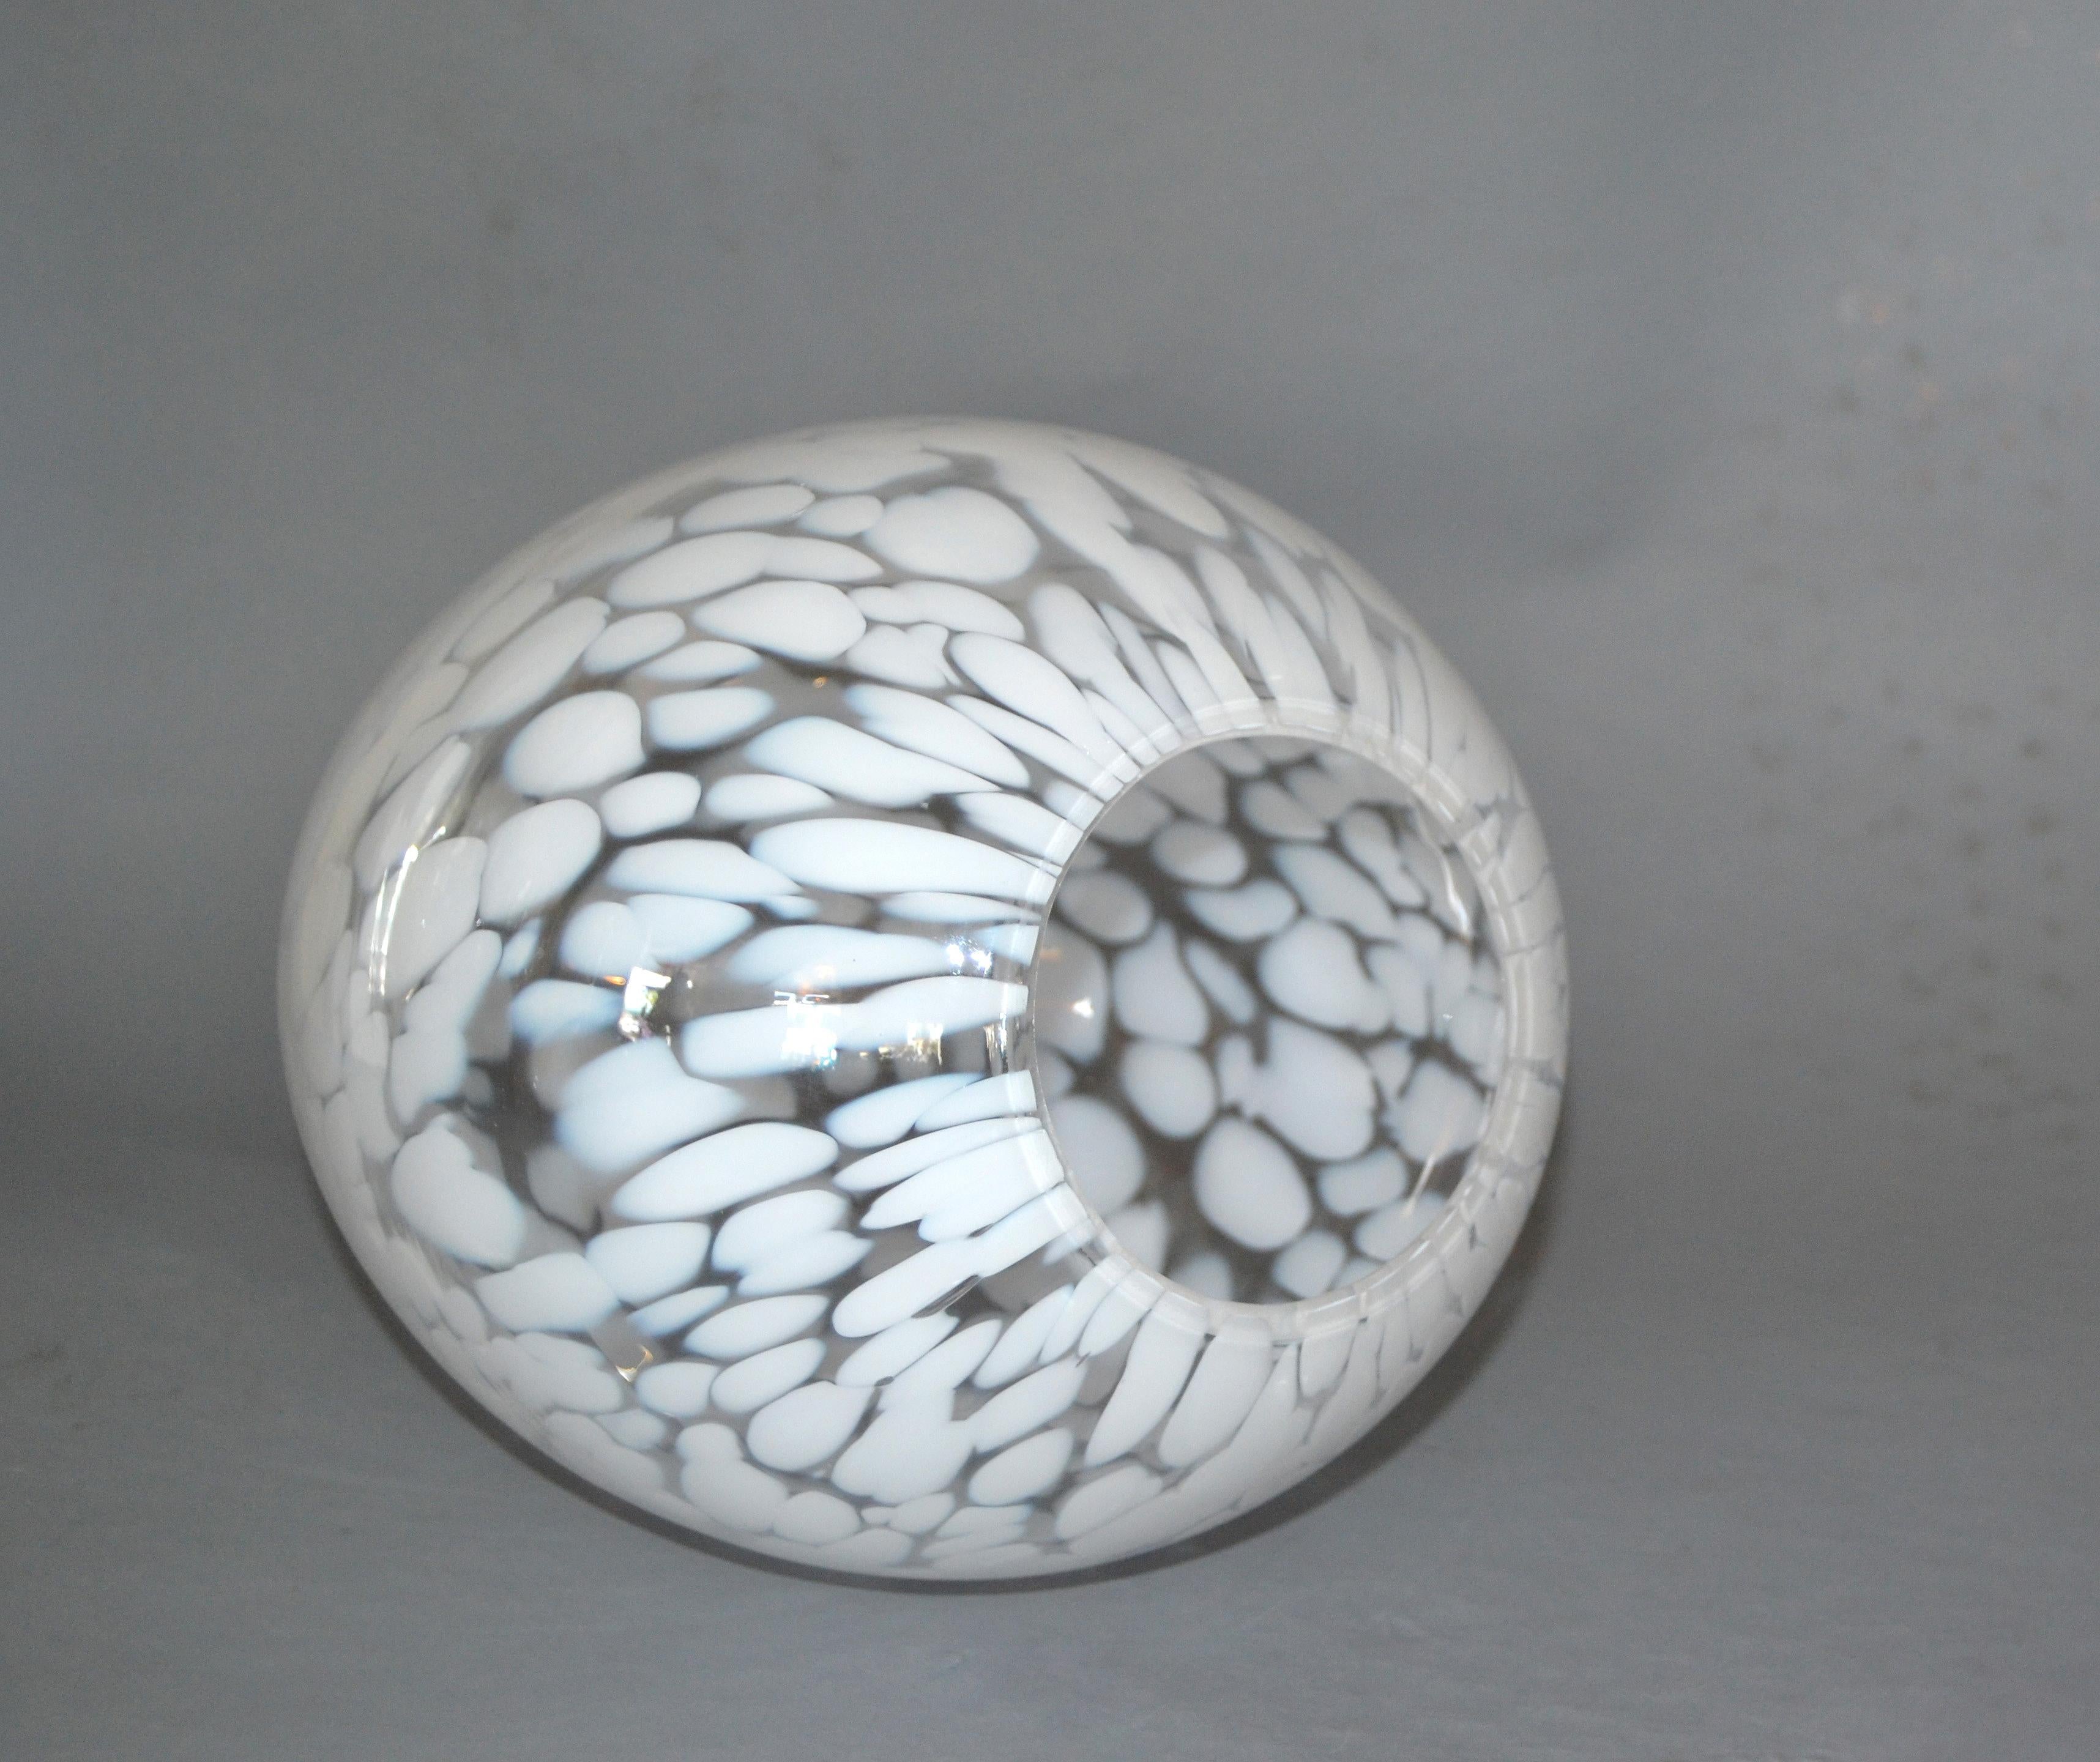 Late 20th Century Hand Blown Murano Art Glass Egg Sculpture, Italy